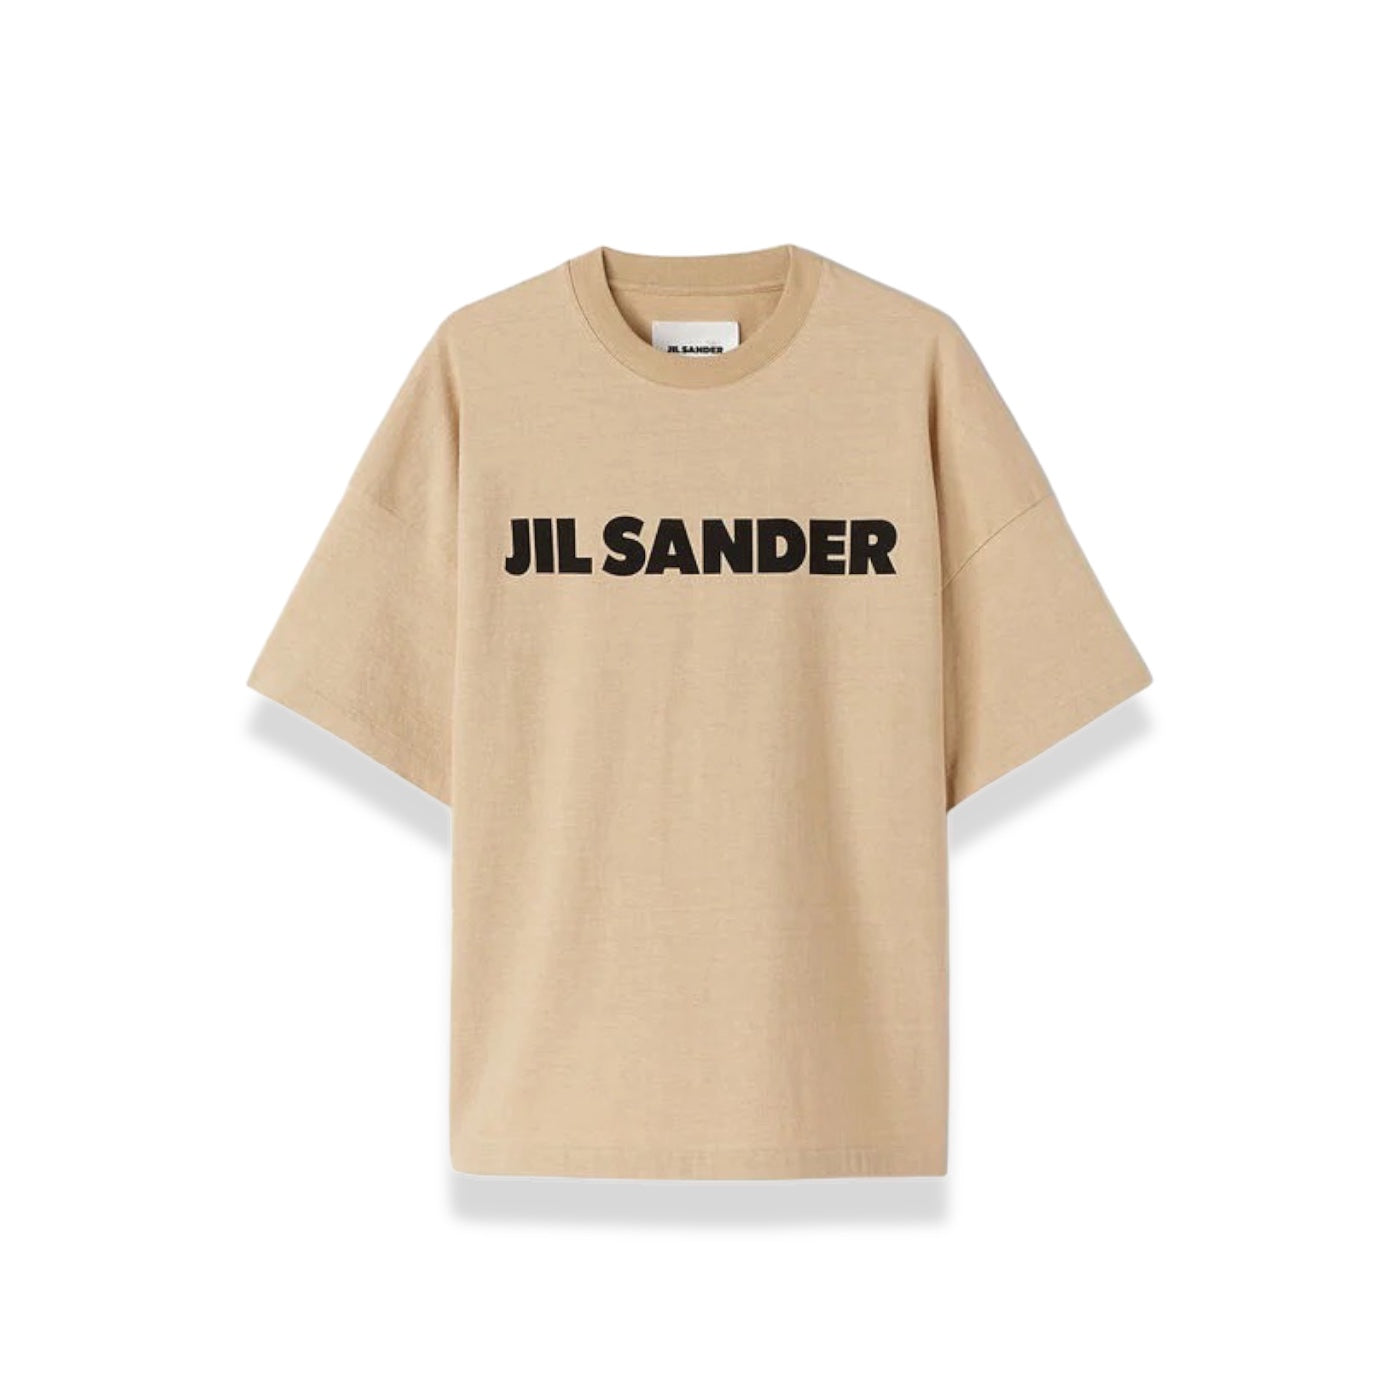 Jil Sander - Cotton Jersey Logo Tee Dark Sand